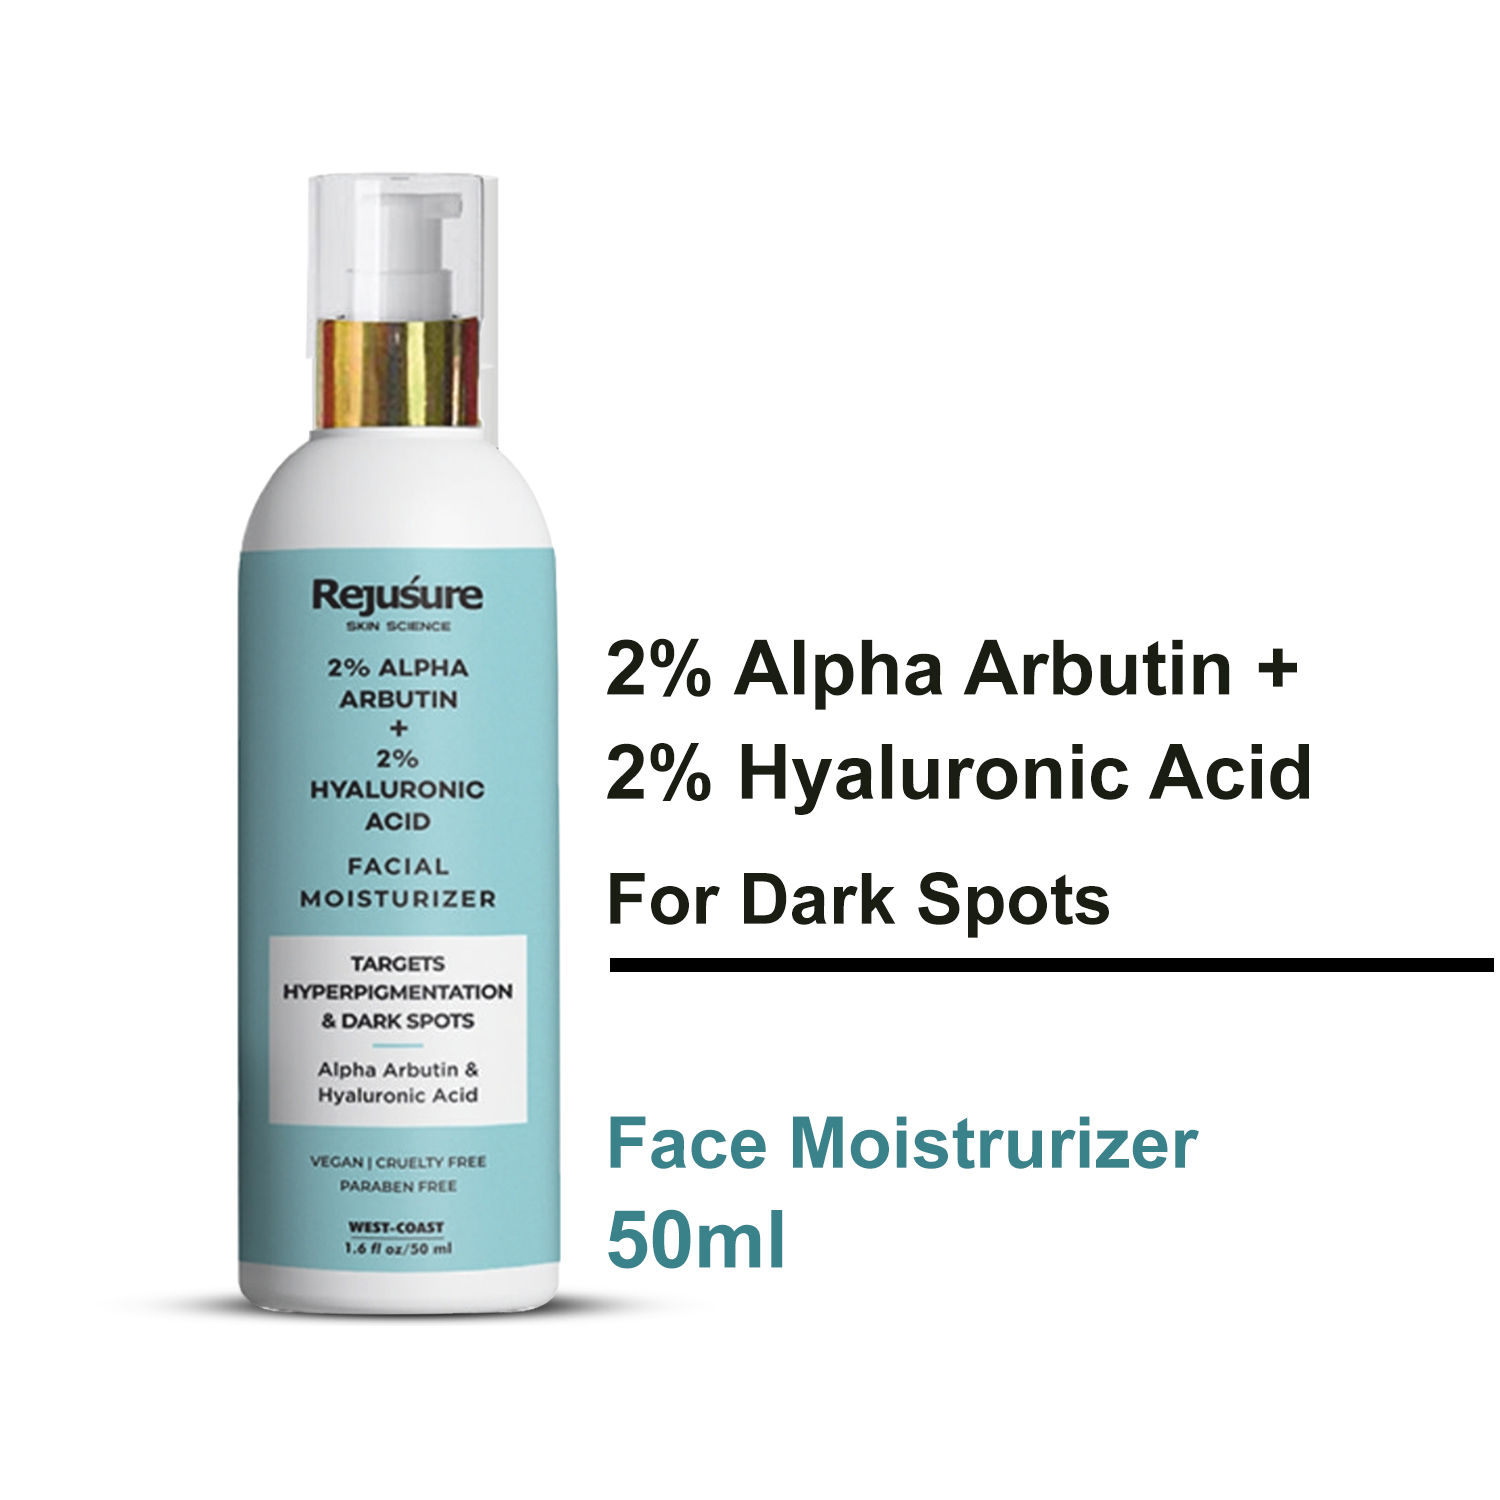 Rejusure Alpha Arbutin 2% + Hyaluronic Acid 2% Face Moisturizer